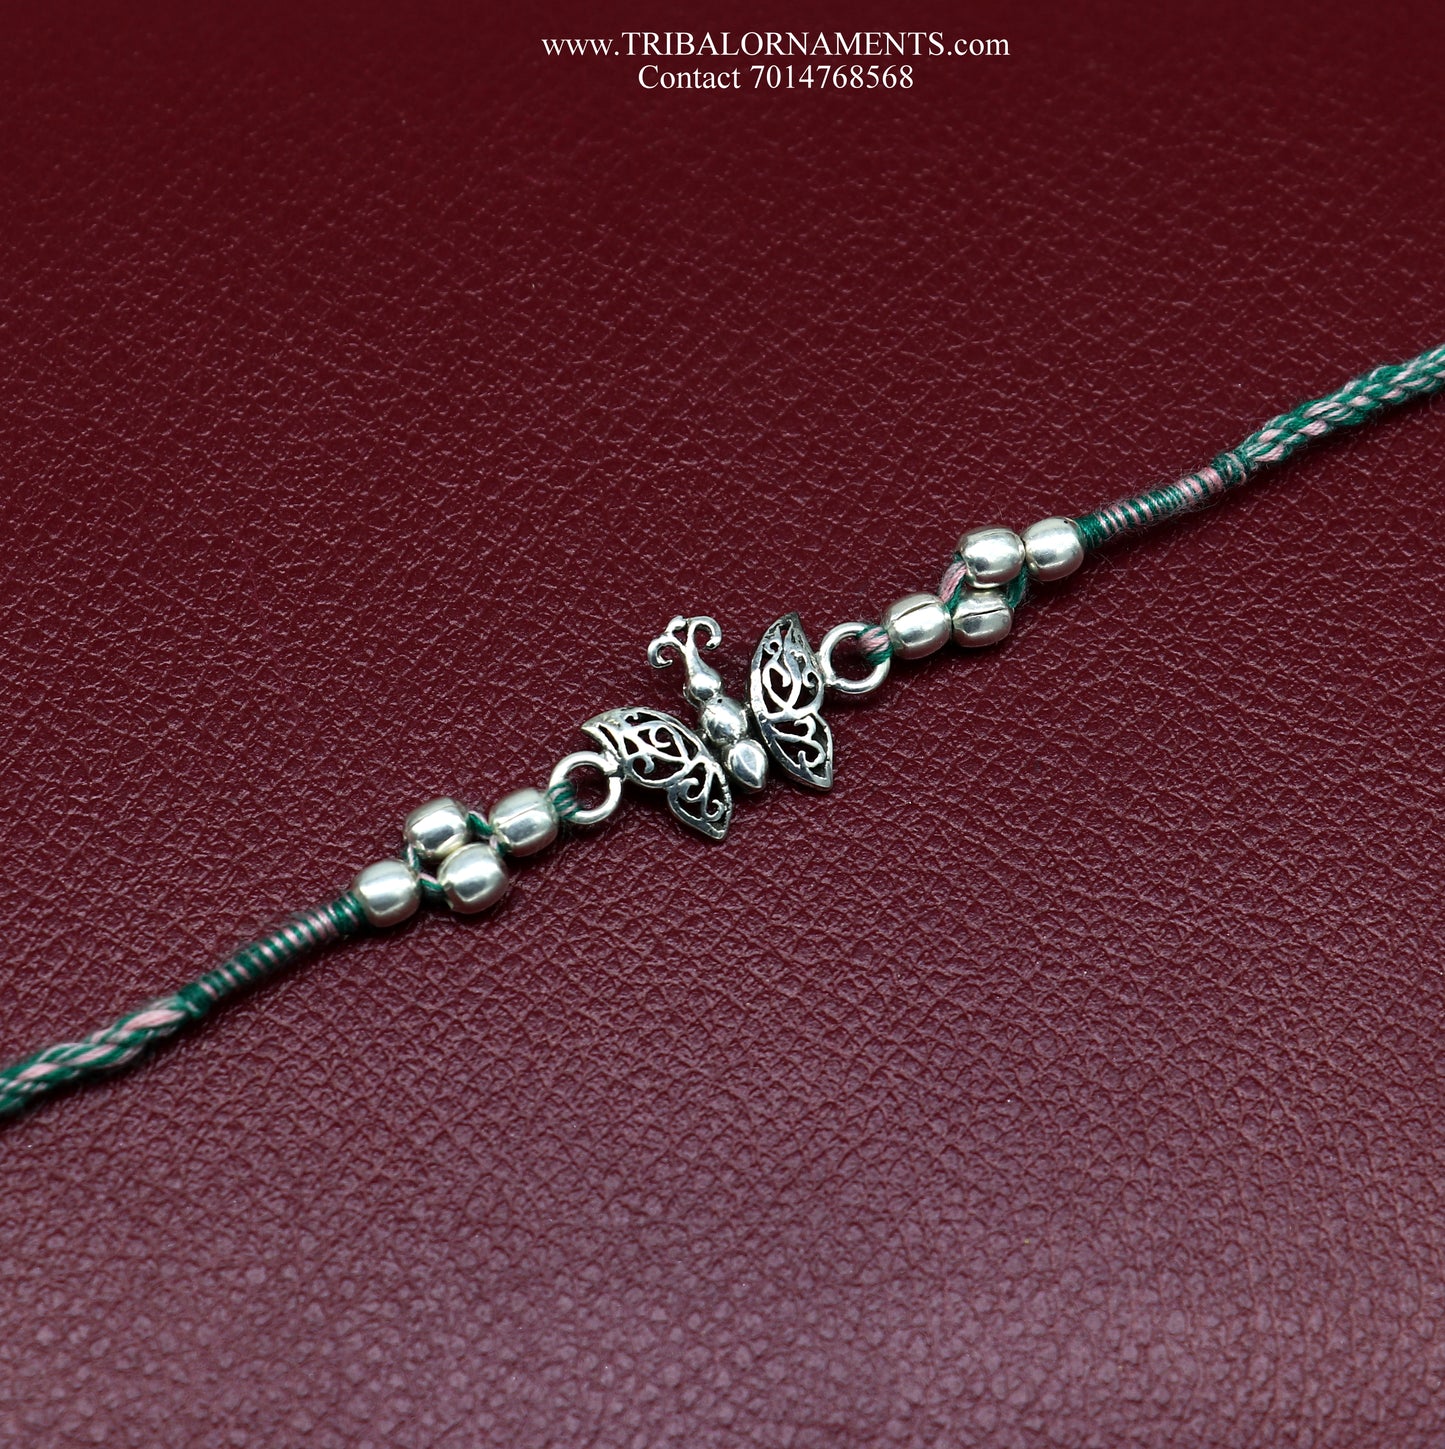 925 sterling silver handmade beautiful Butterfly design Rakhi Bracelet, amazing stylish gift for Rakshabandhan rk97 - TRIBAL ORNAMENTS